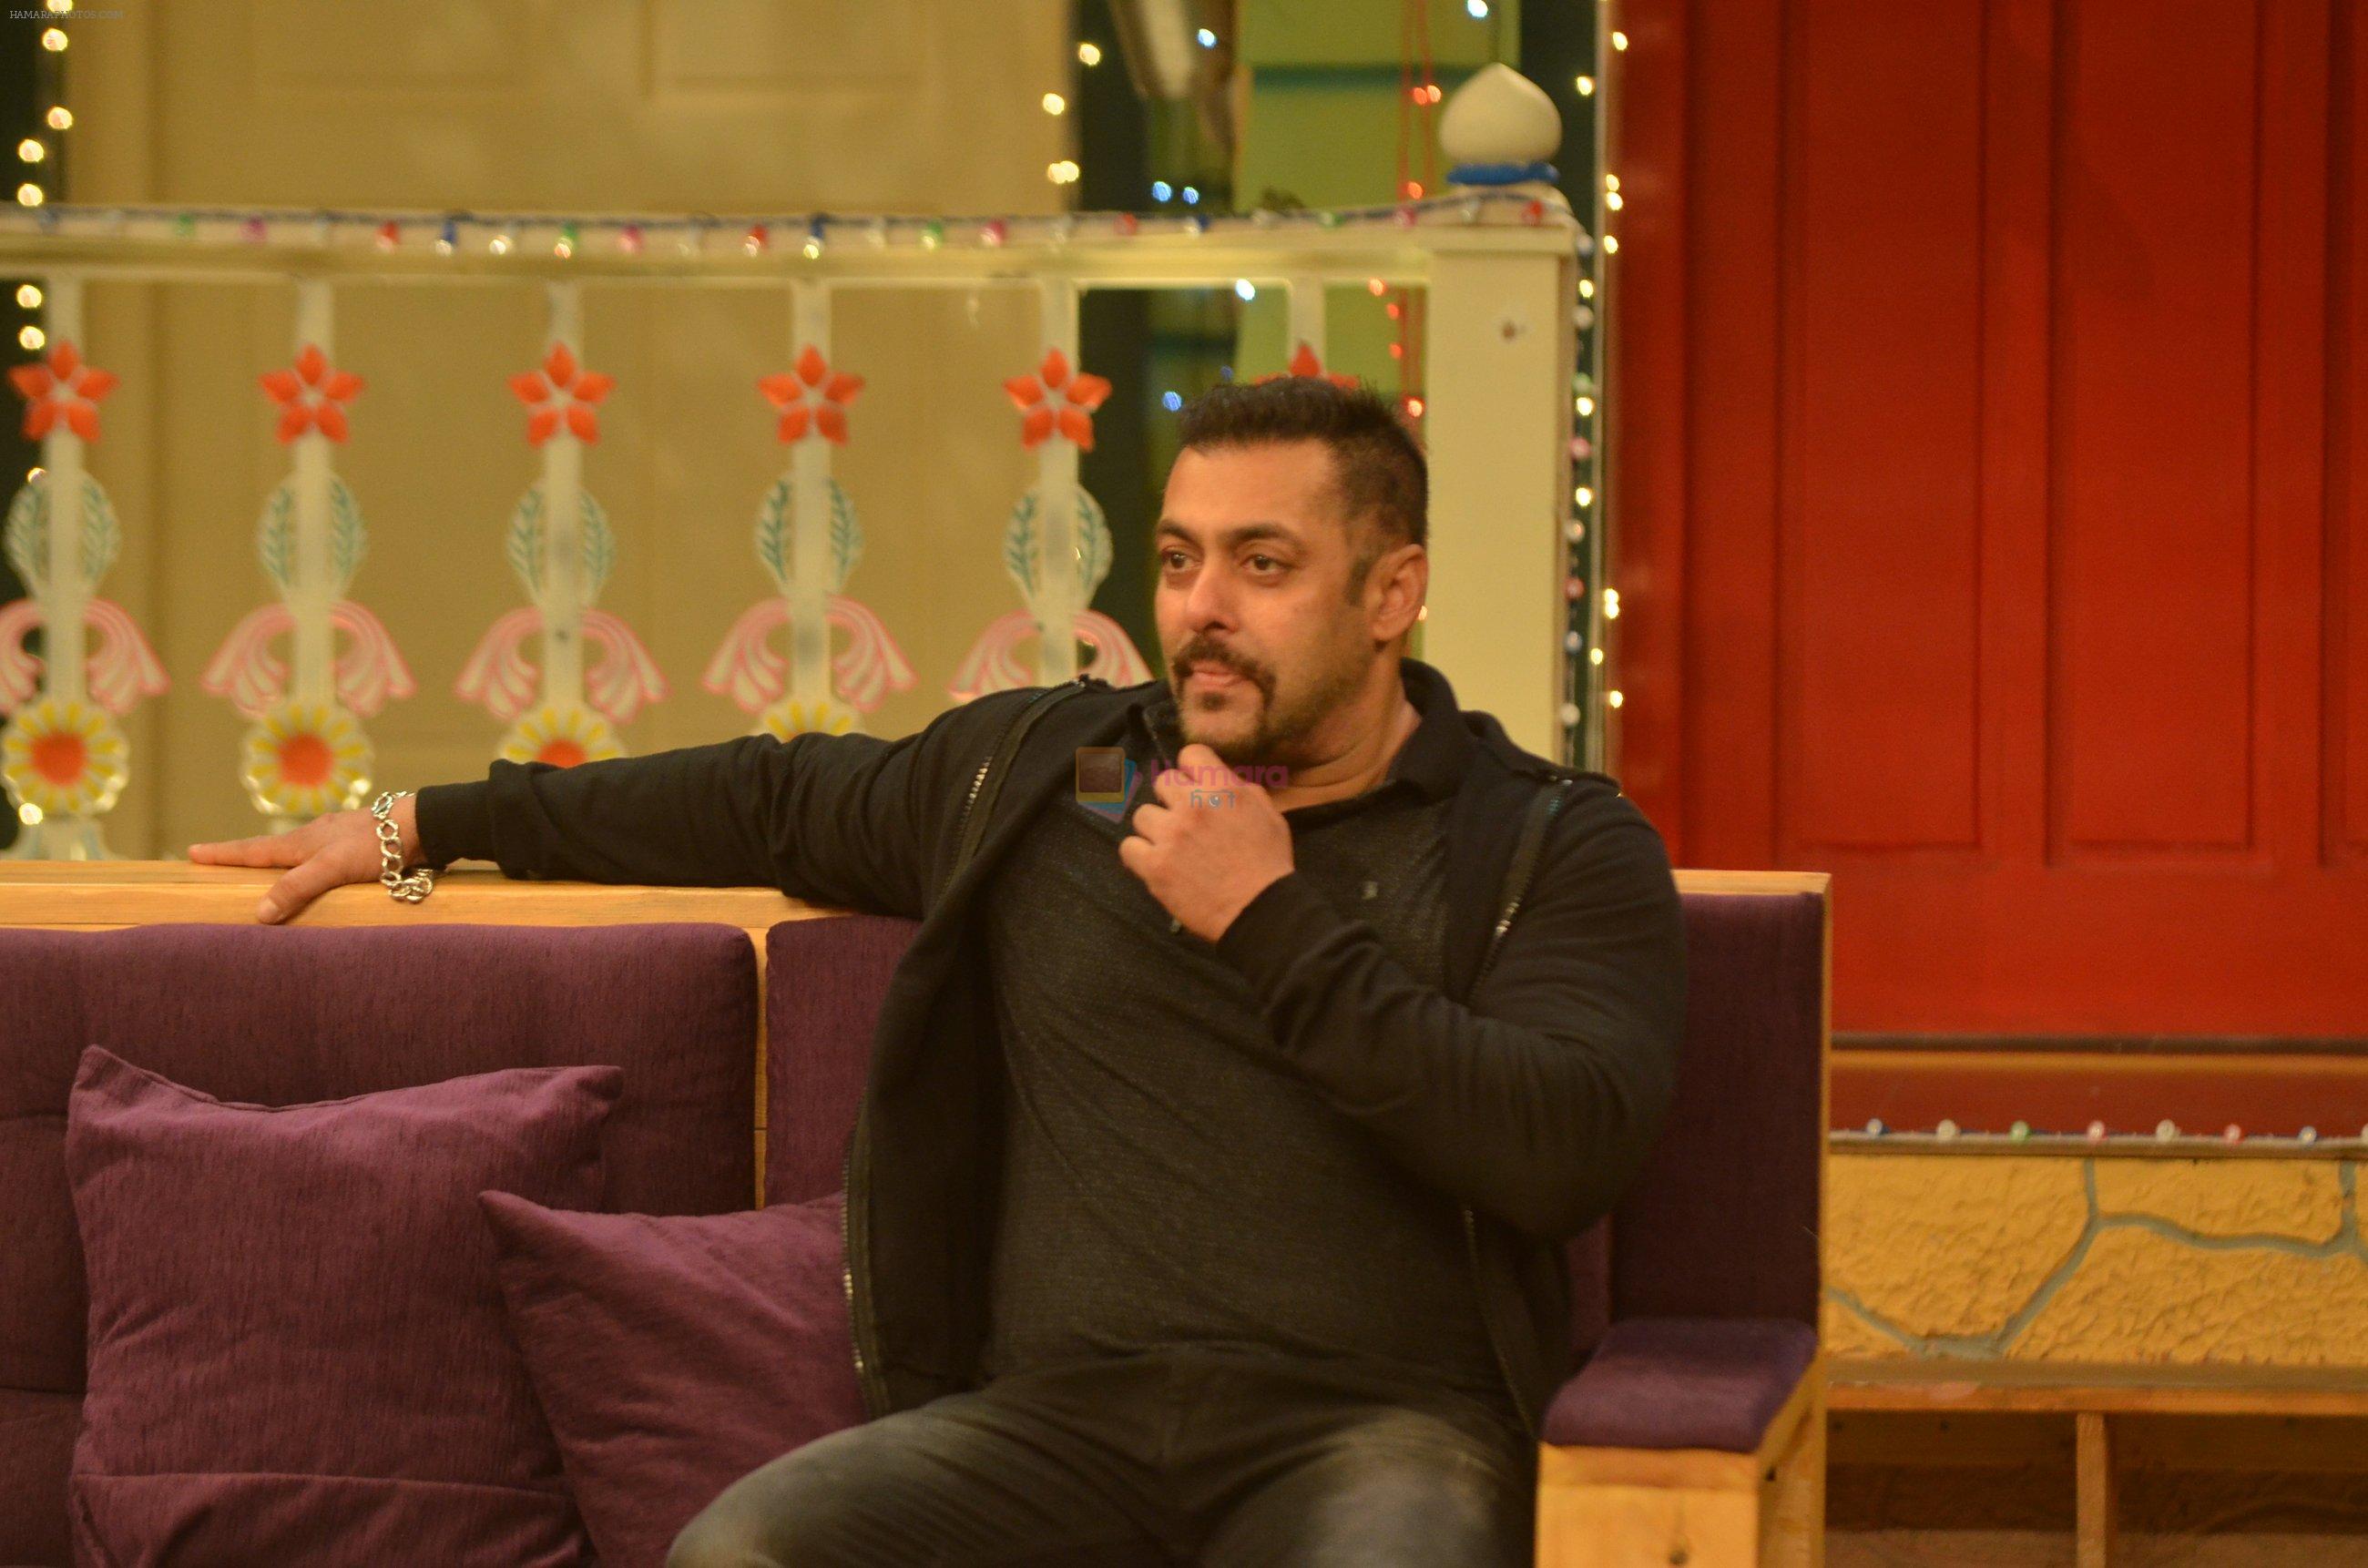 Salman Khan on the sets of The Kapil Sharma Show on 3rd July 2016